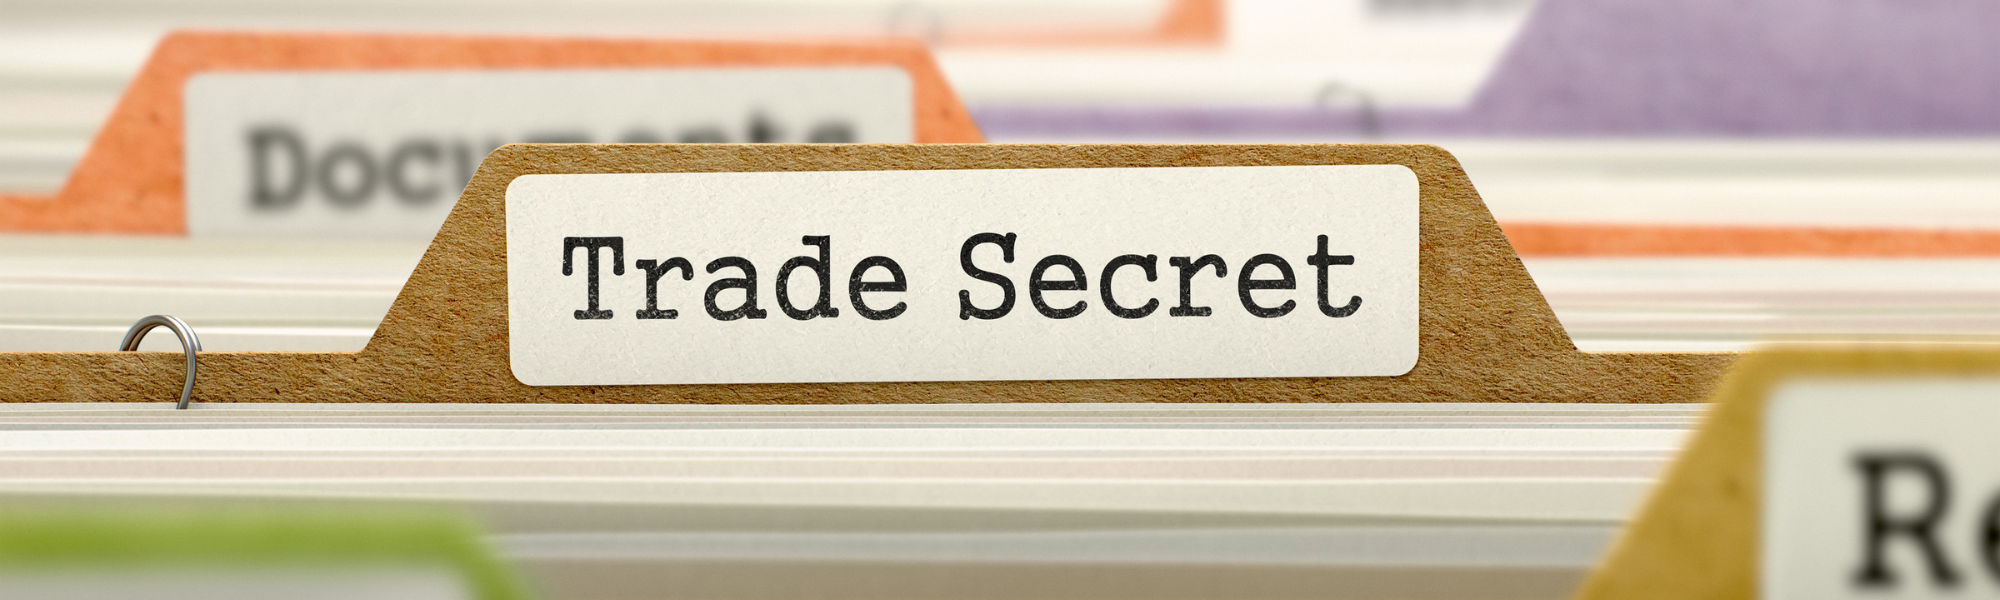 protecting trade secrets